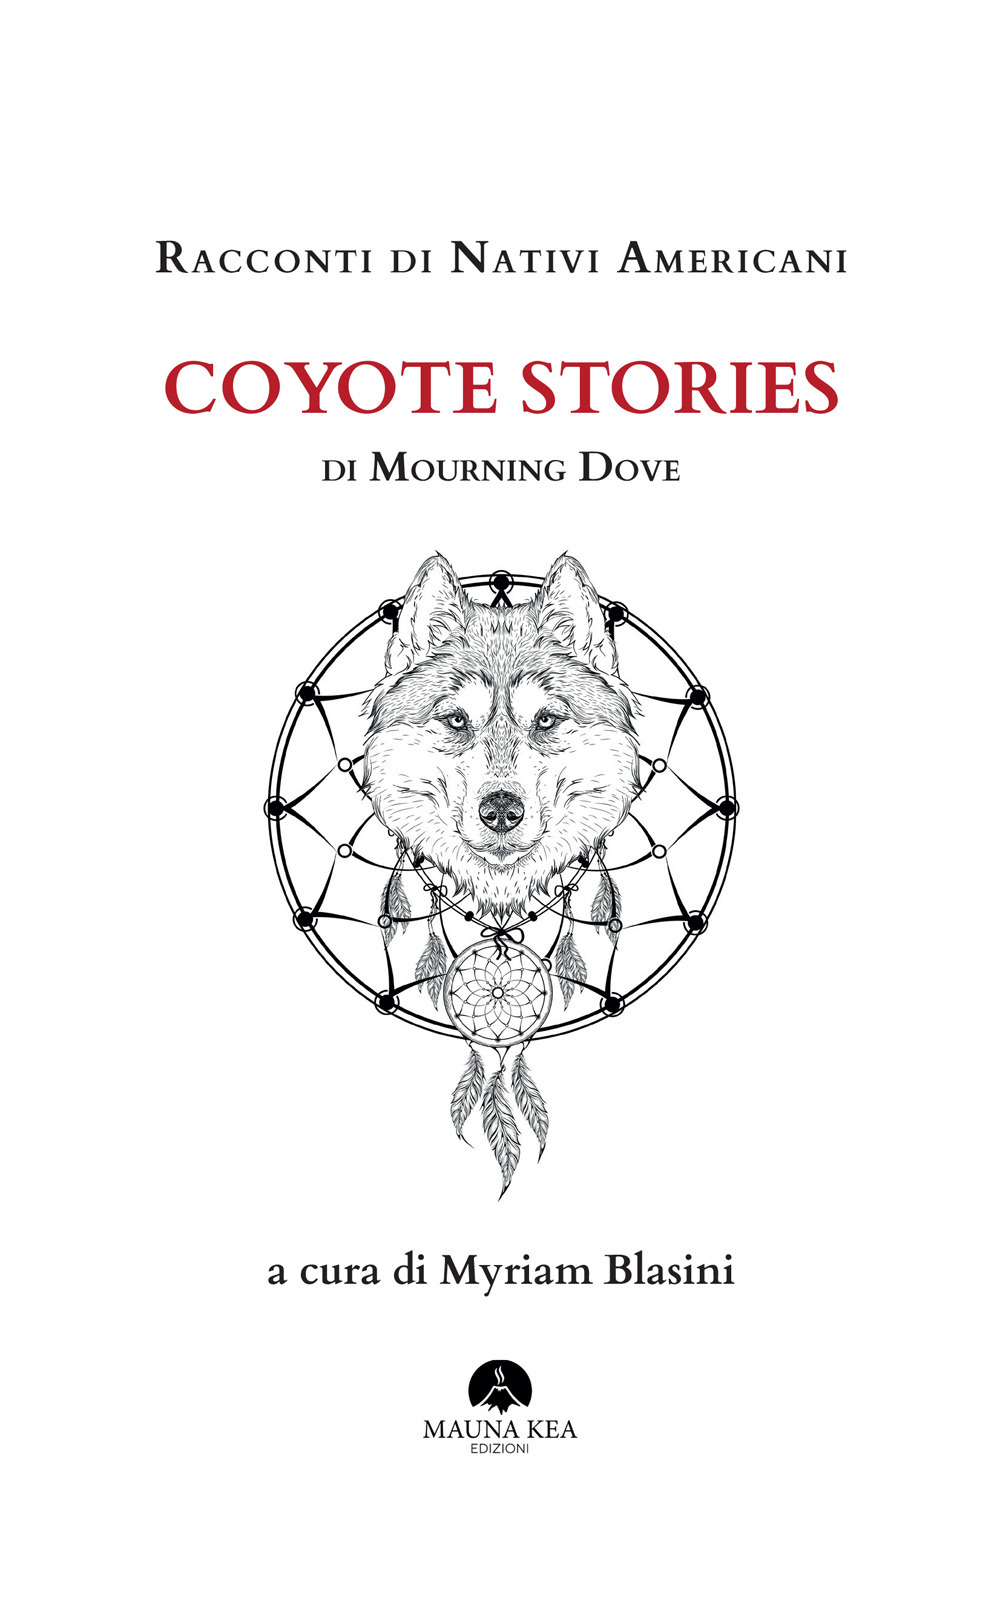 Racconti di nativi americani: Coyote stories